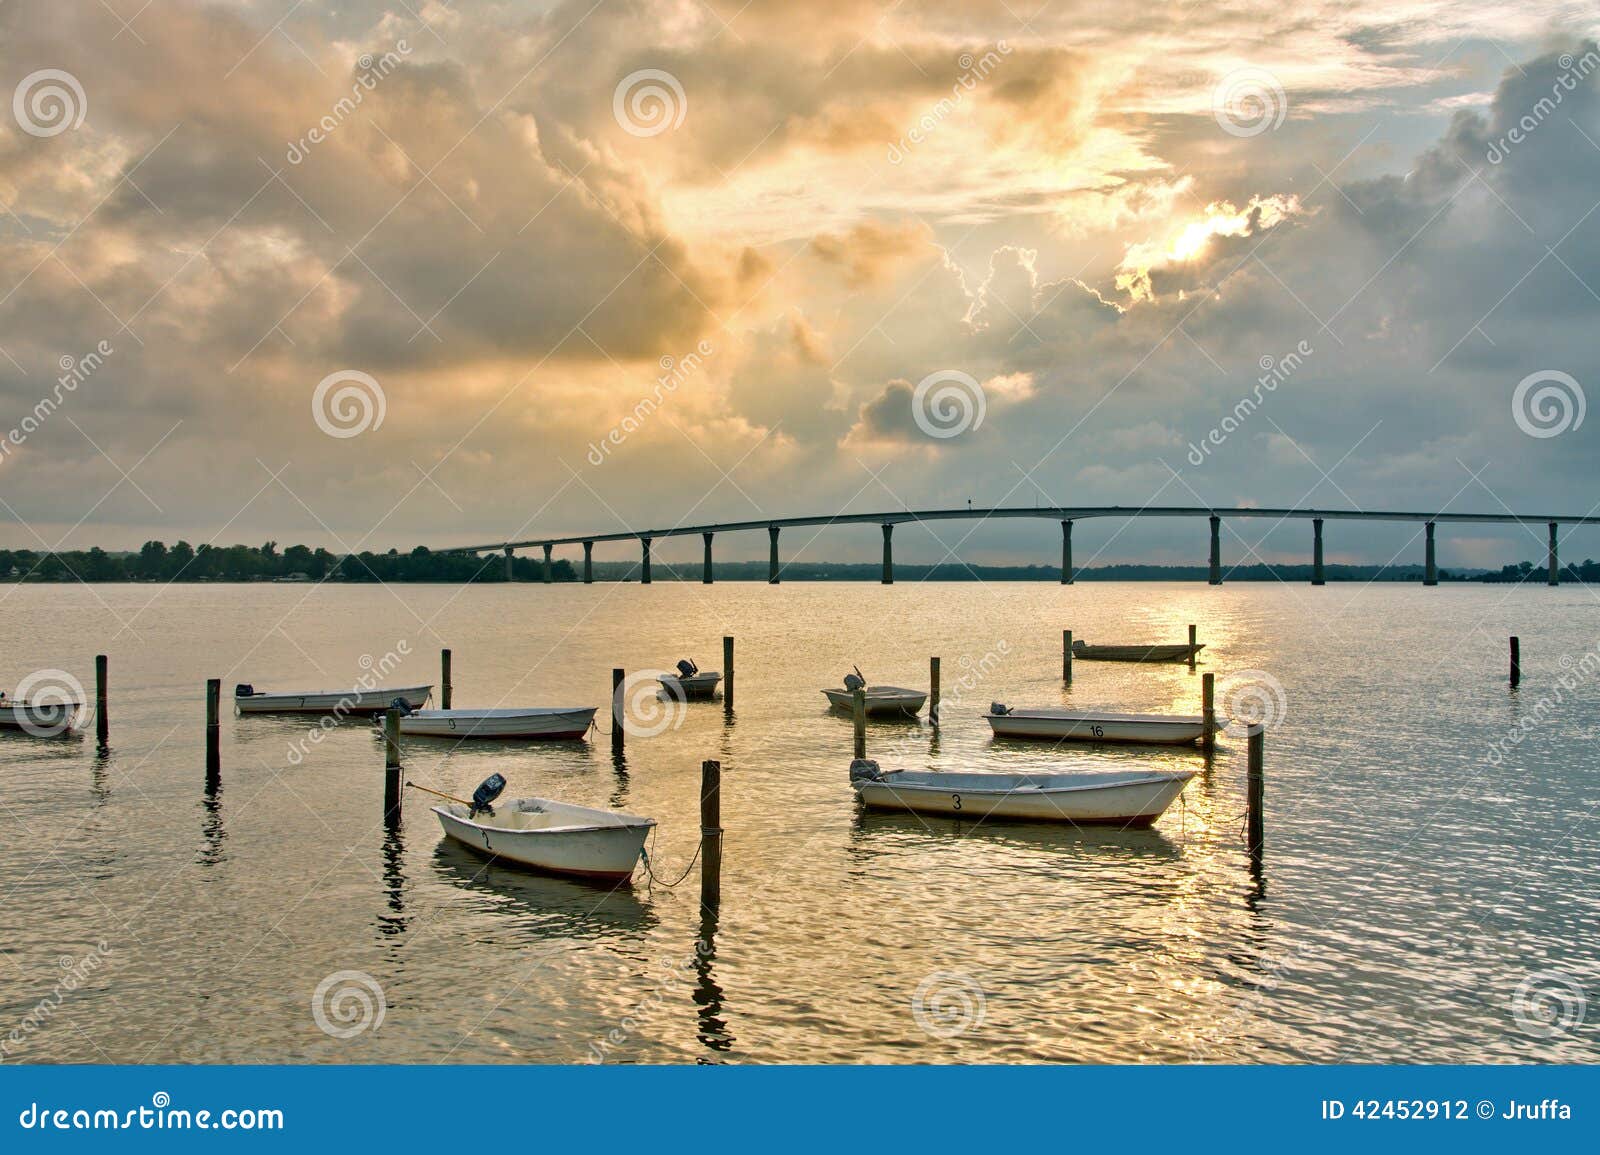 boats in chesapeake bay at solomons island